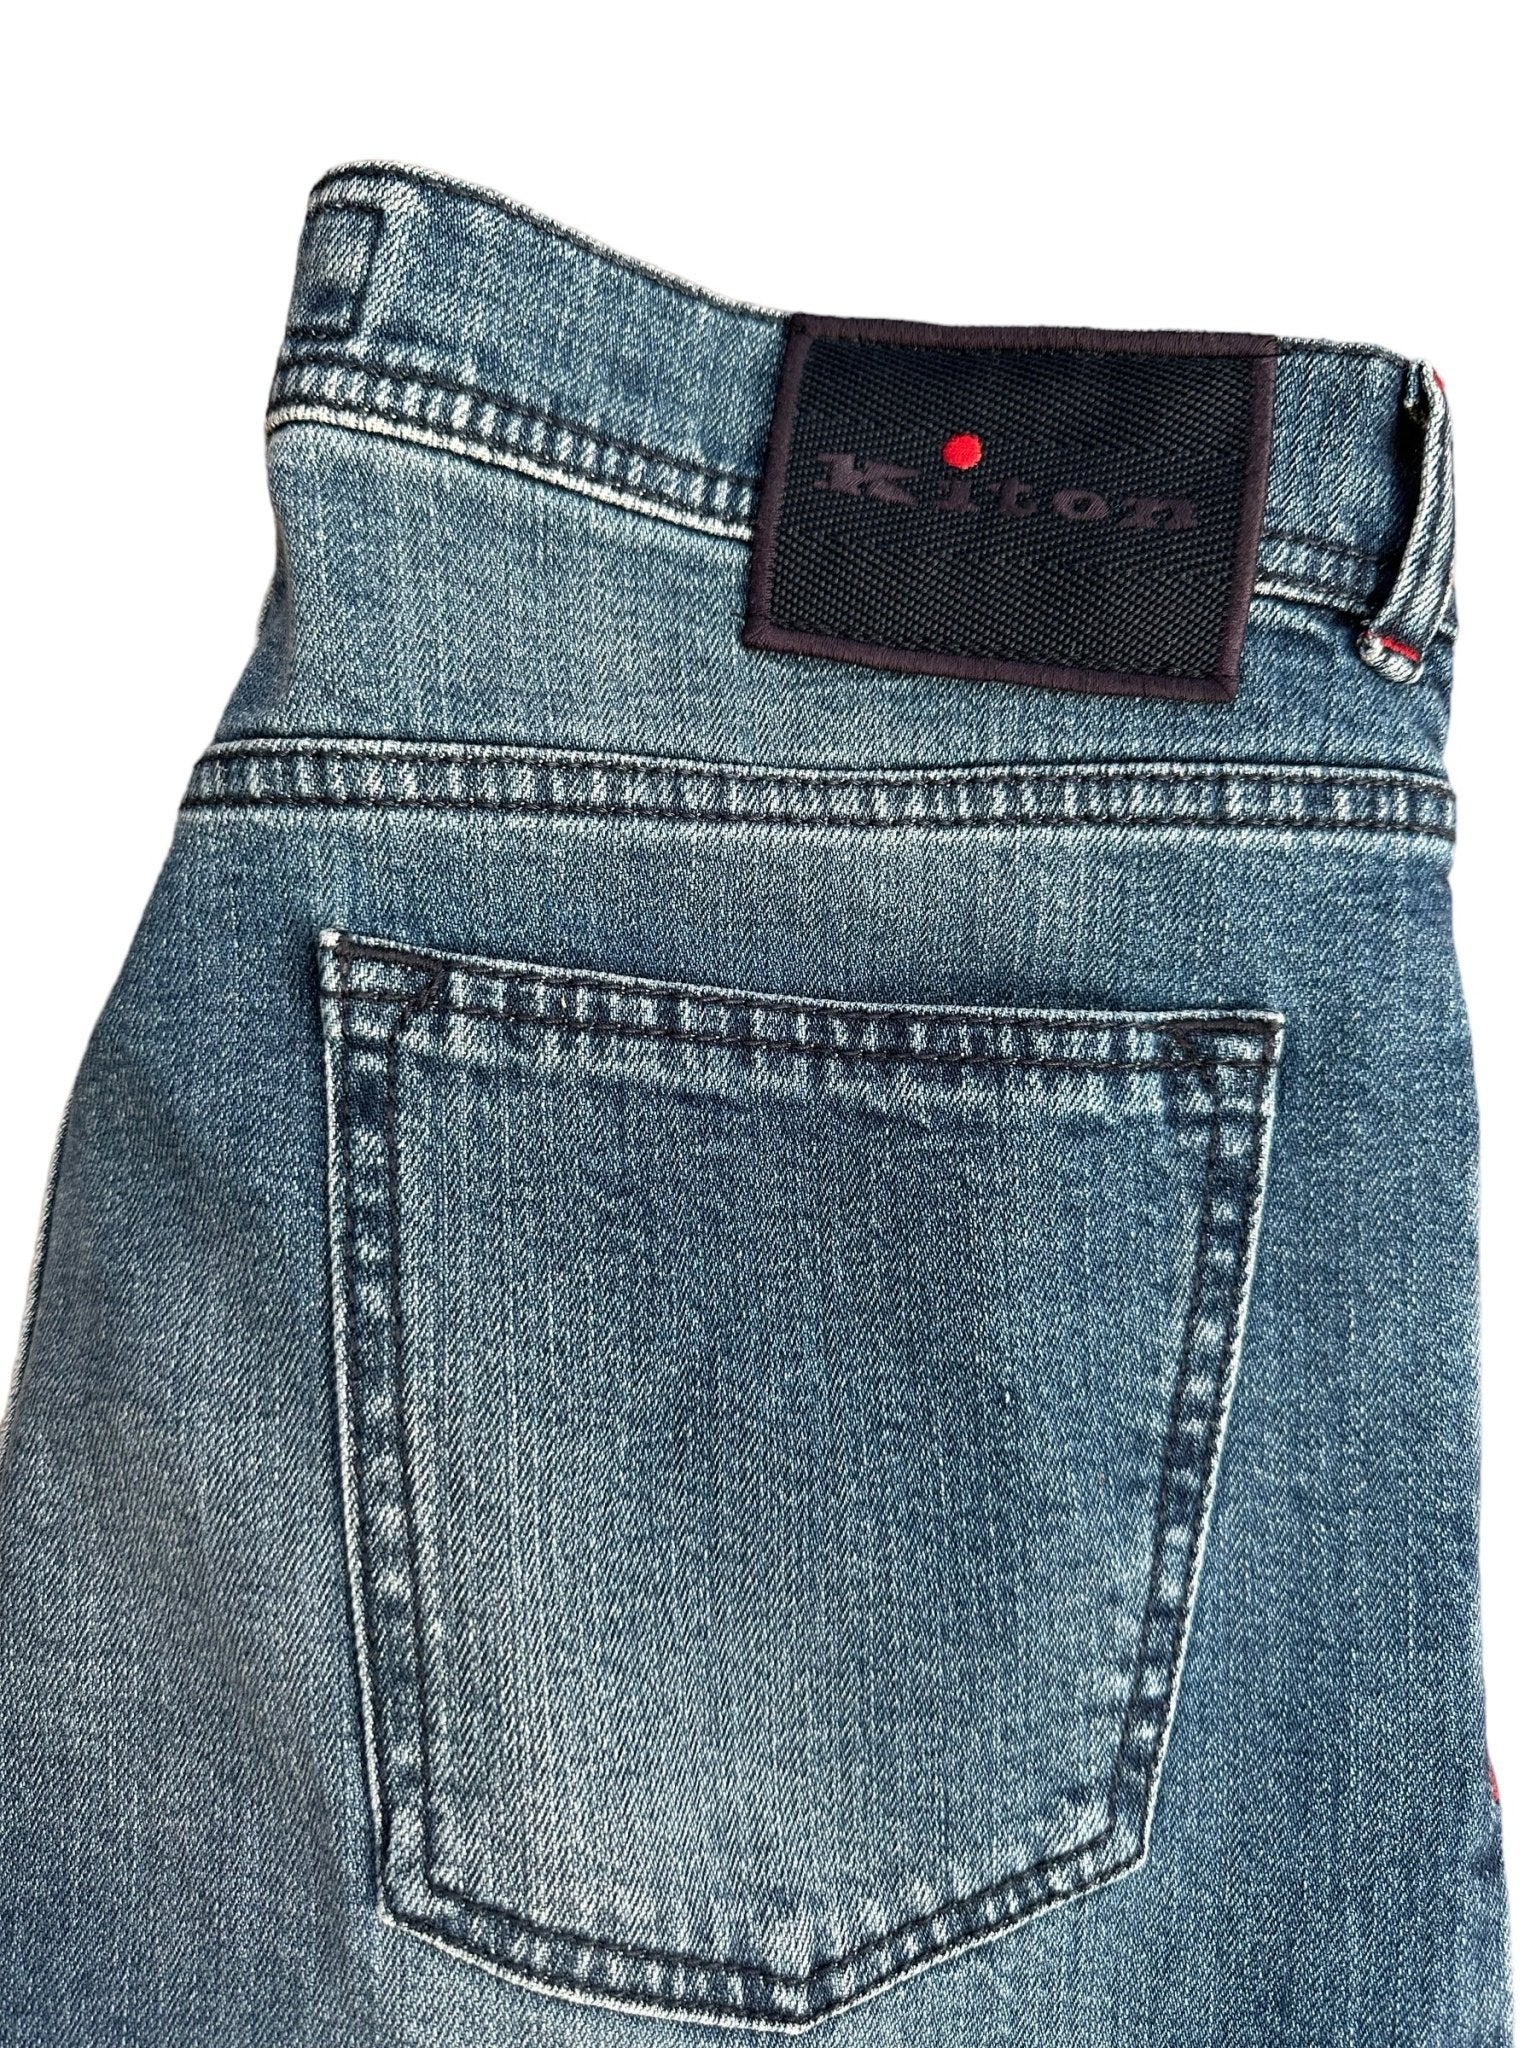 Kiton Jeans Slim - 24/7 Clothing